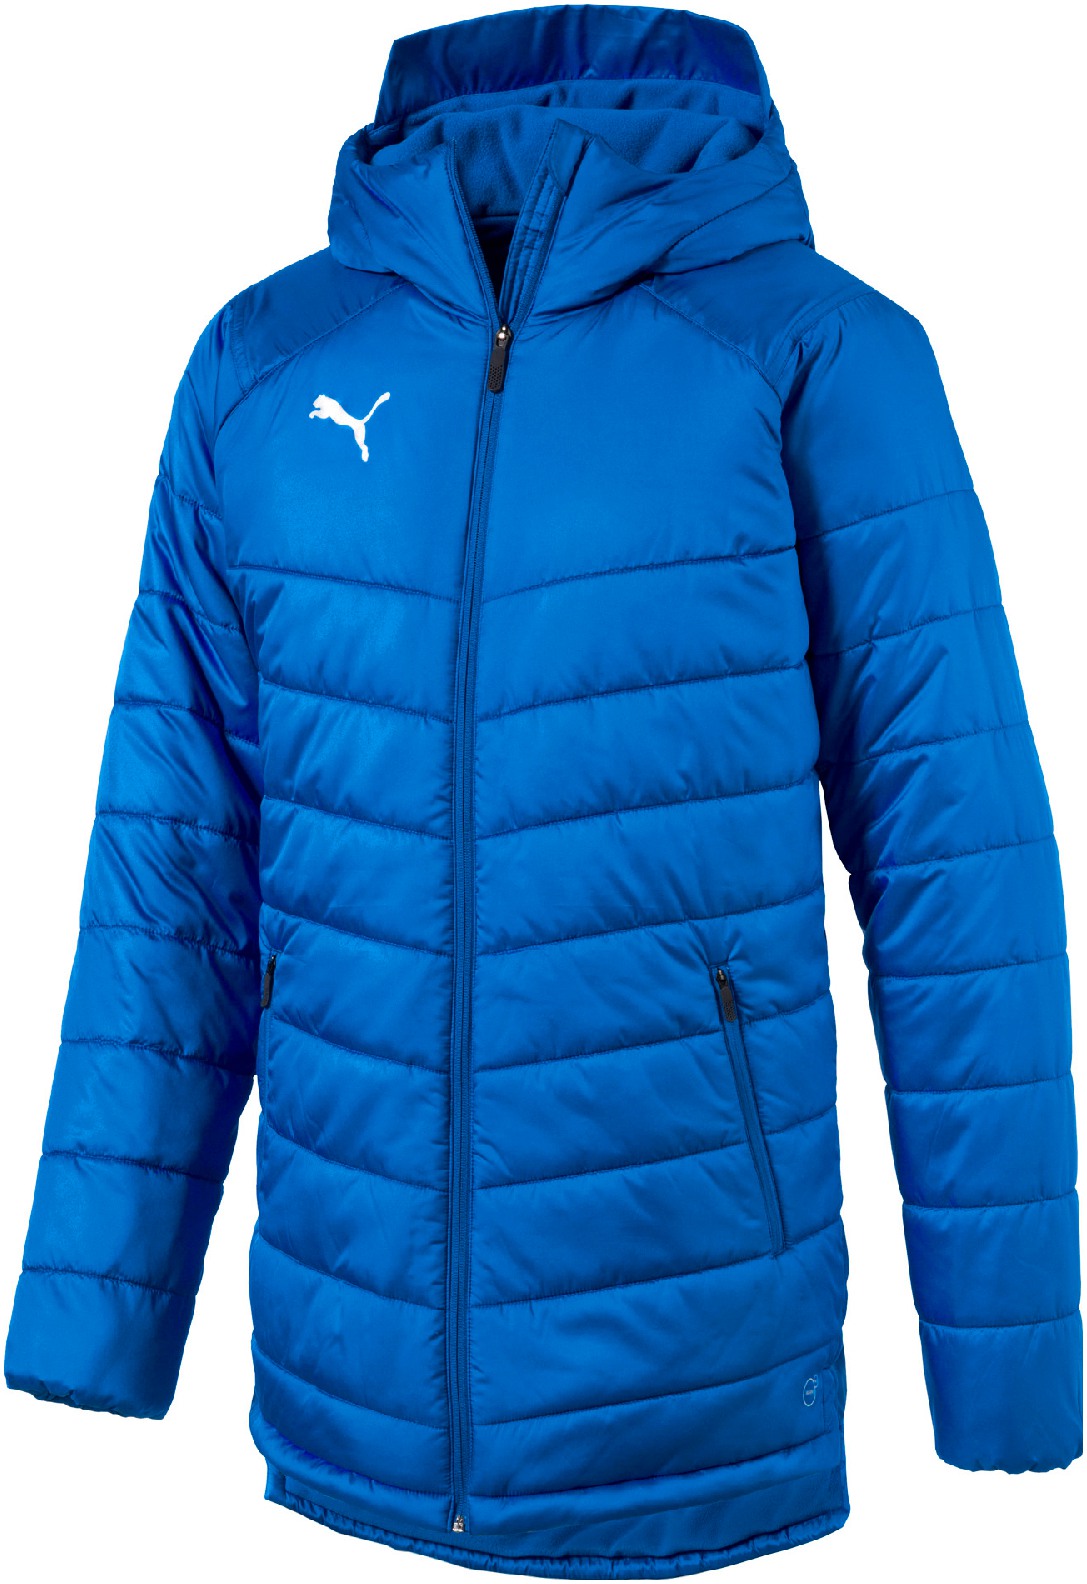 Mens winter jacket Puma LIGA SIDELINE BENCH JACKET blue | AD Sport.store